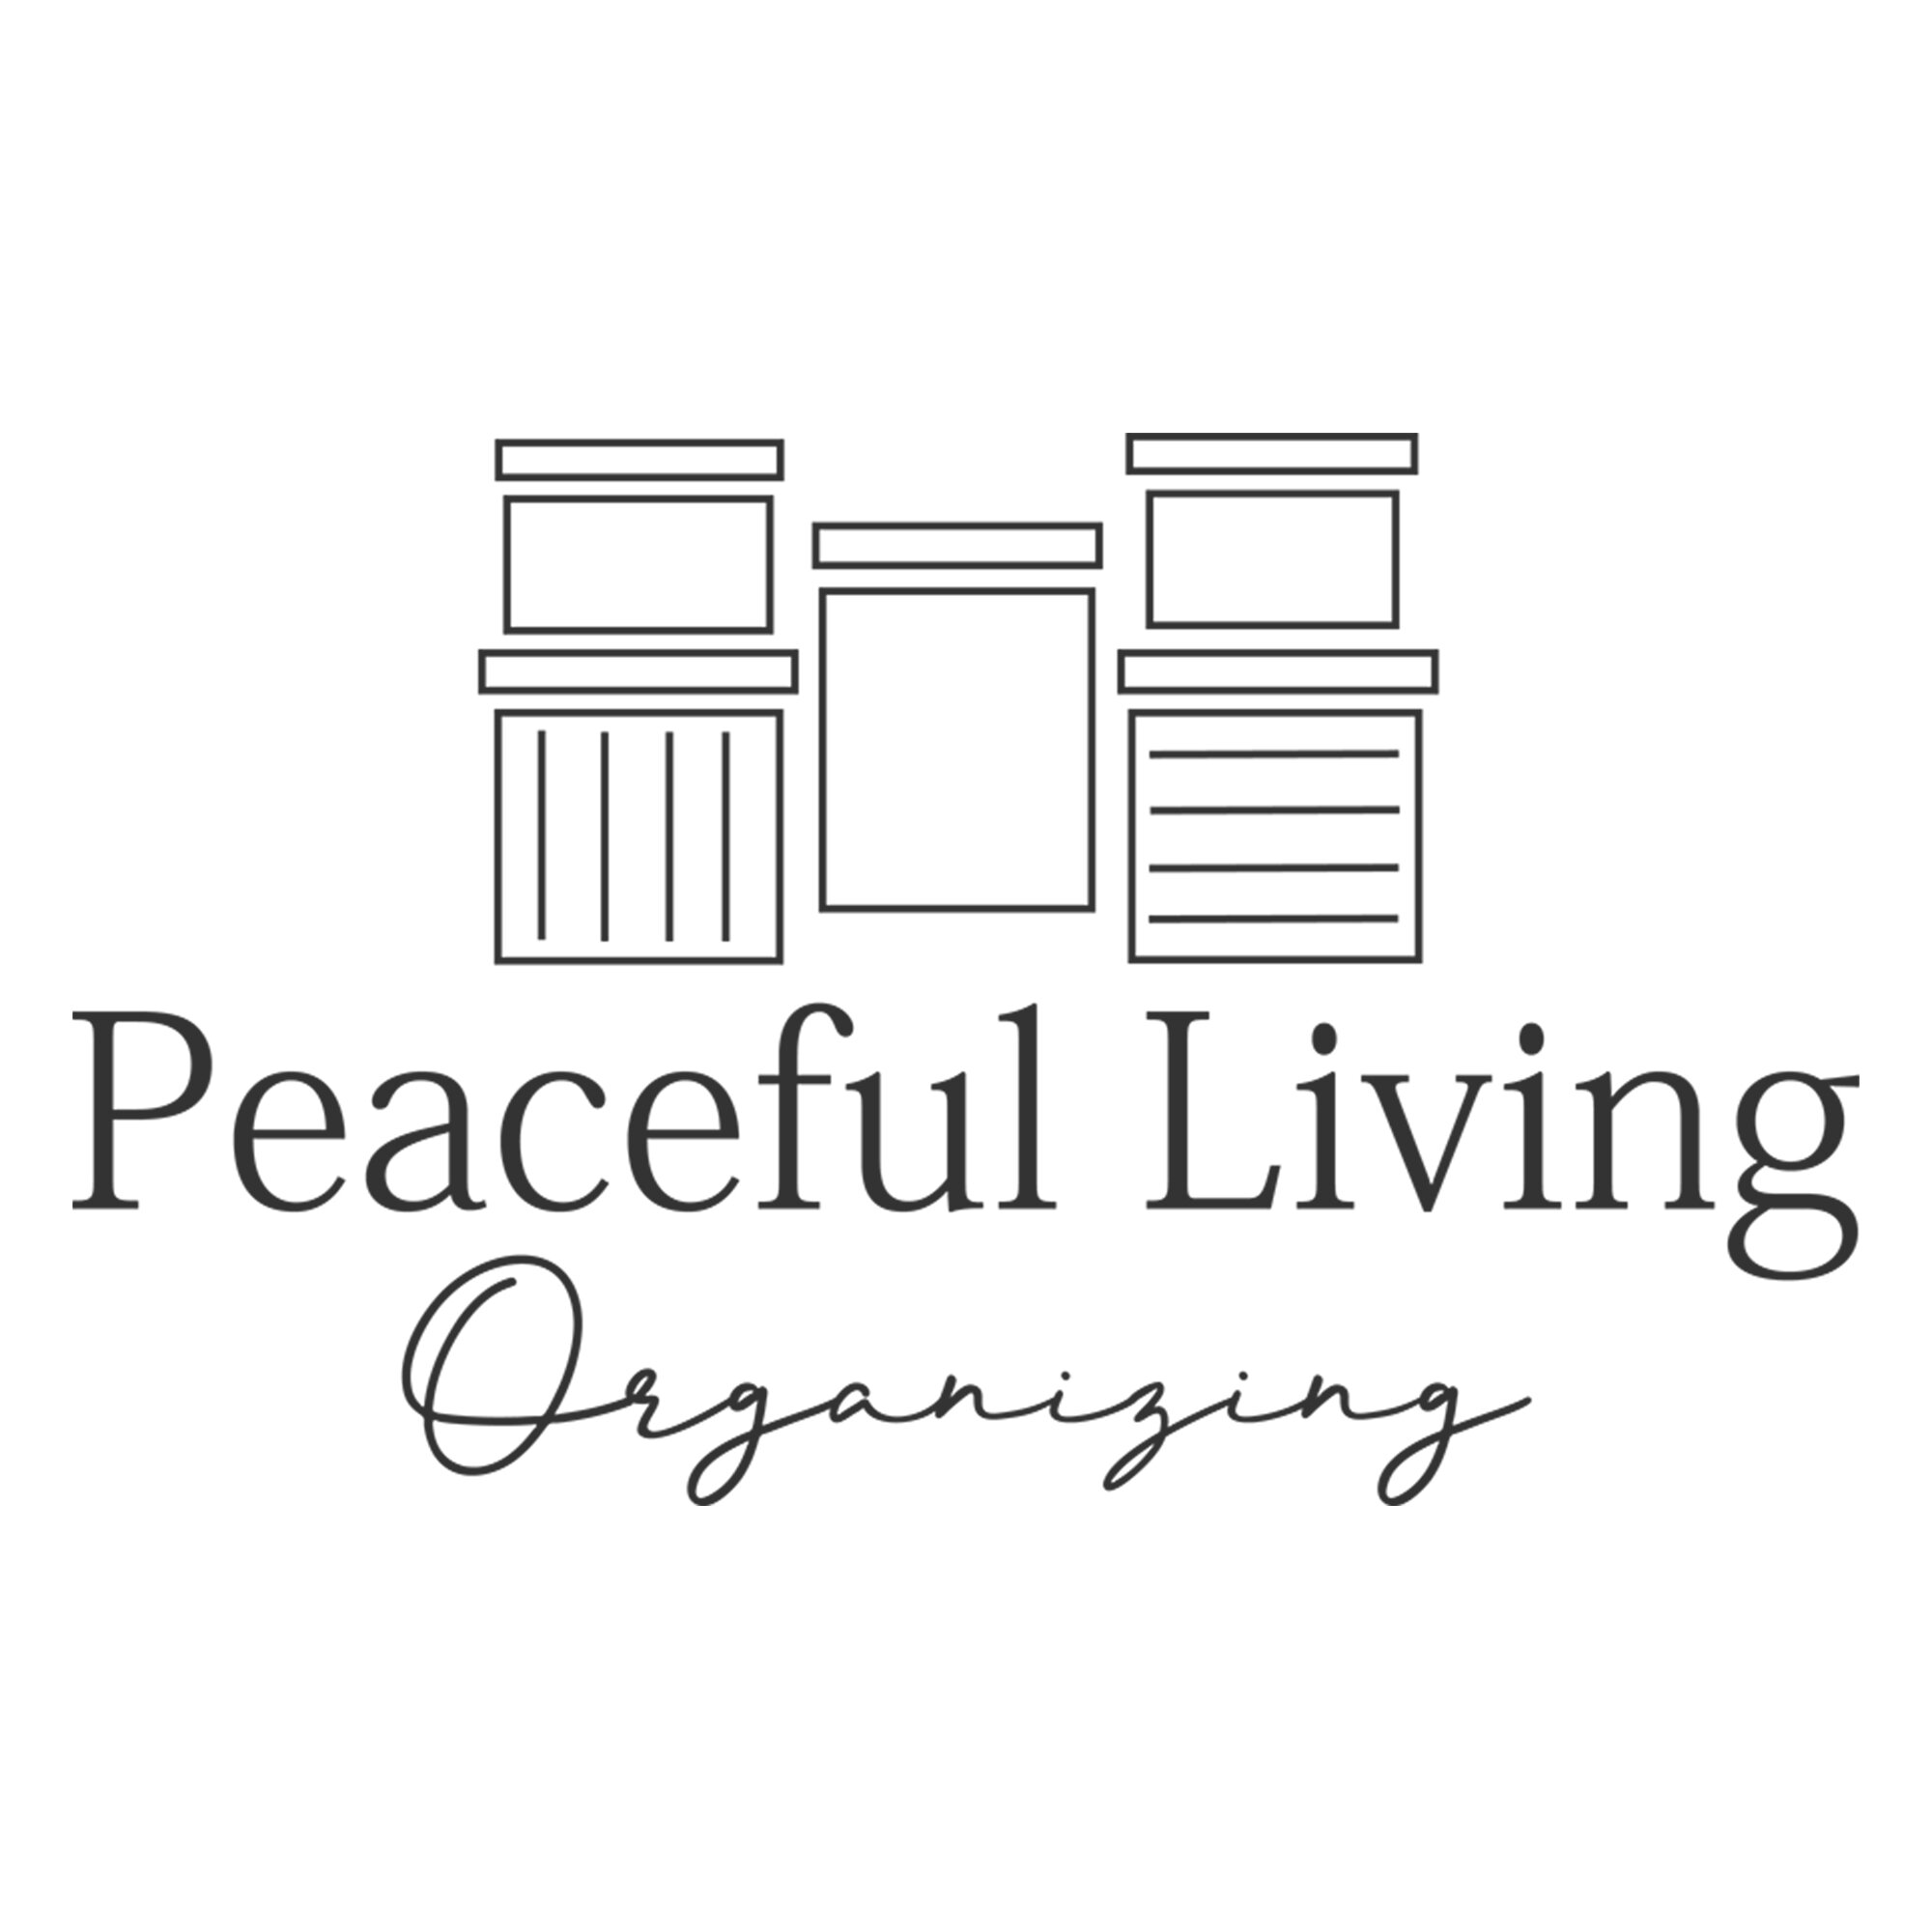 Peaceful Living Organizing